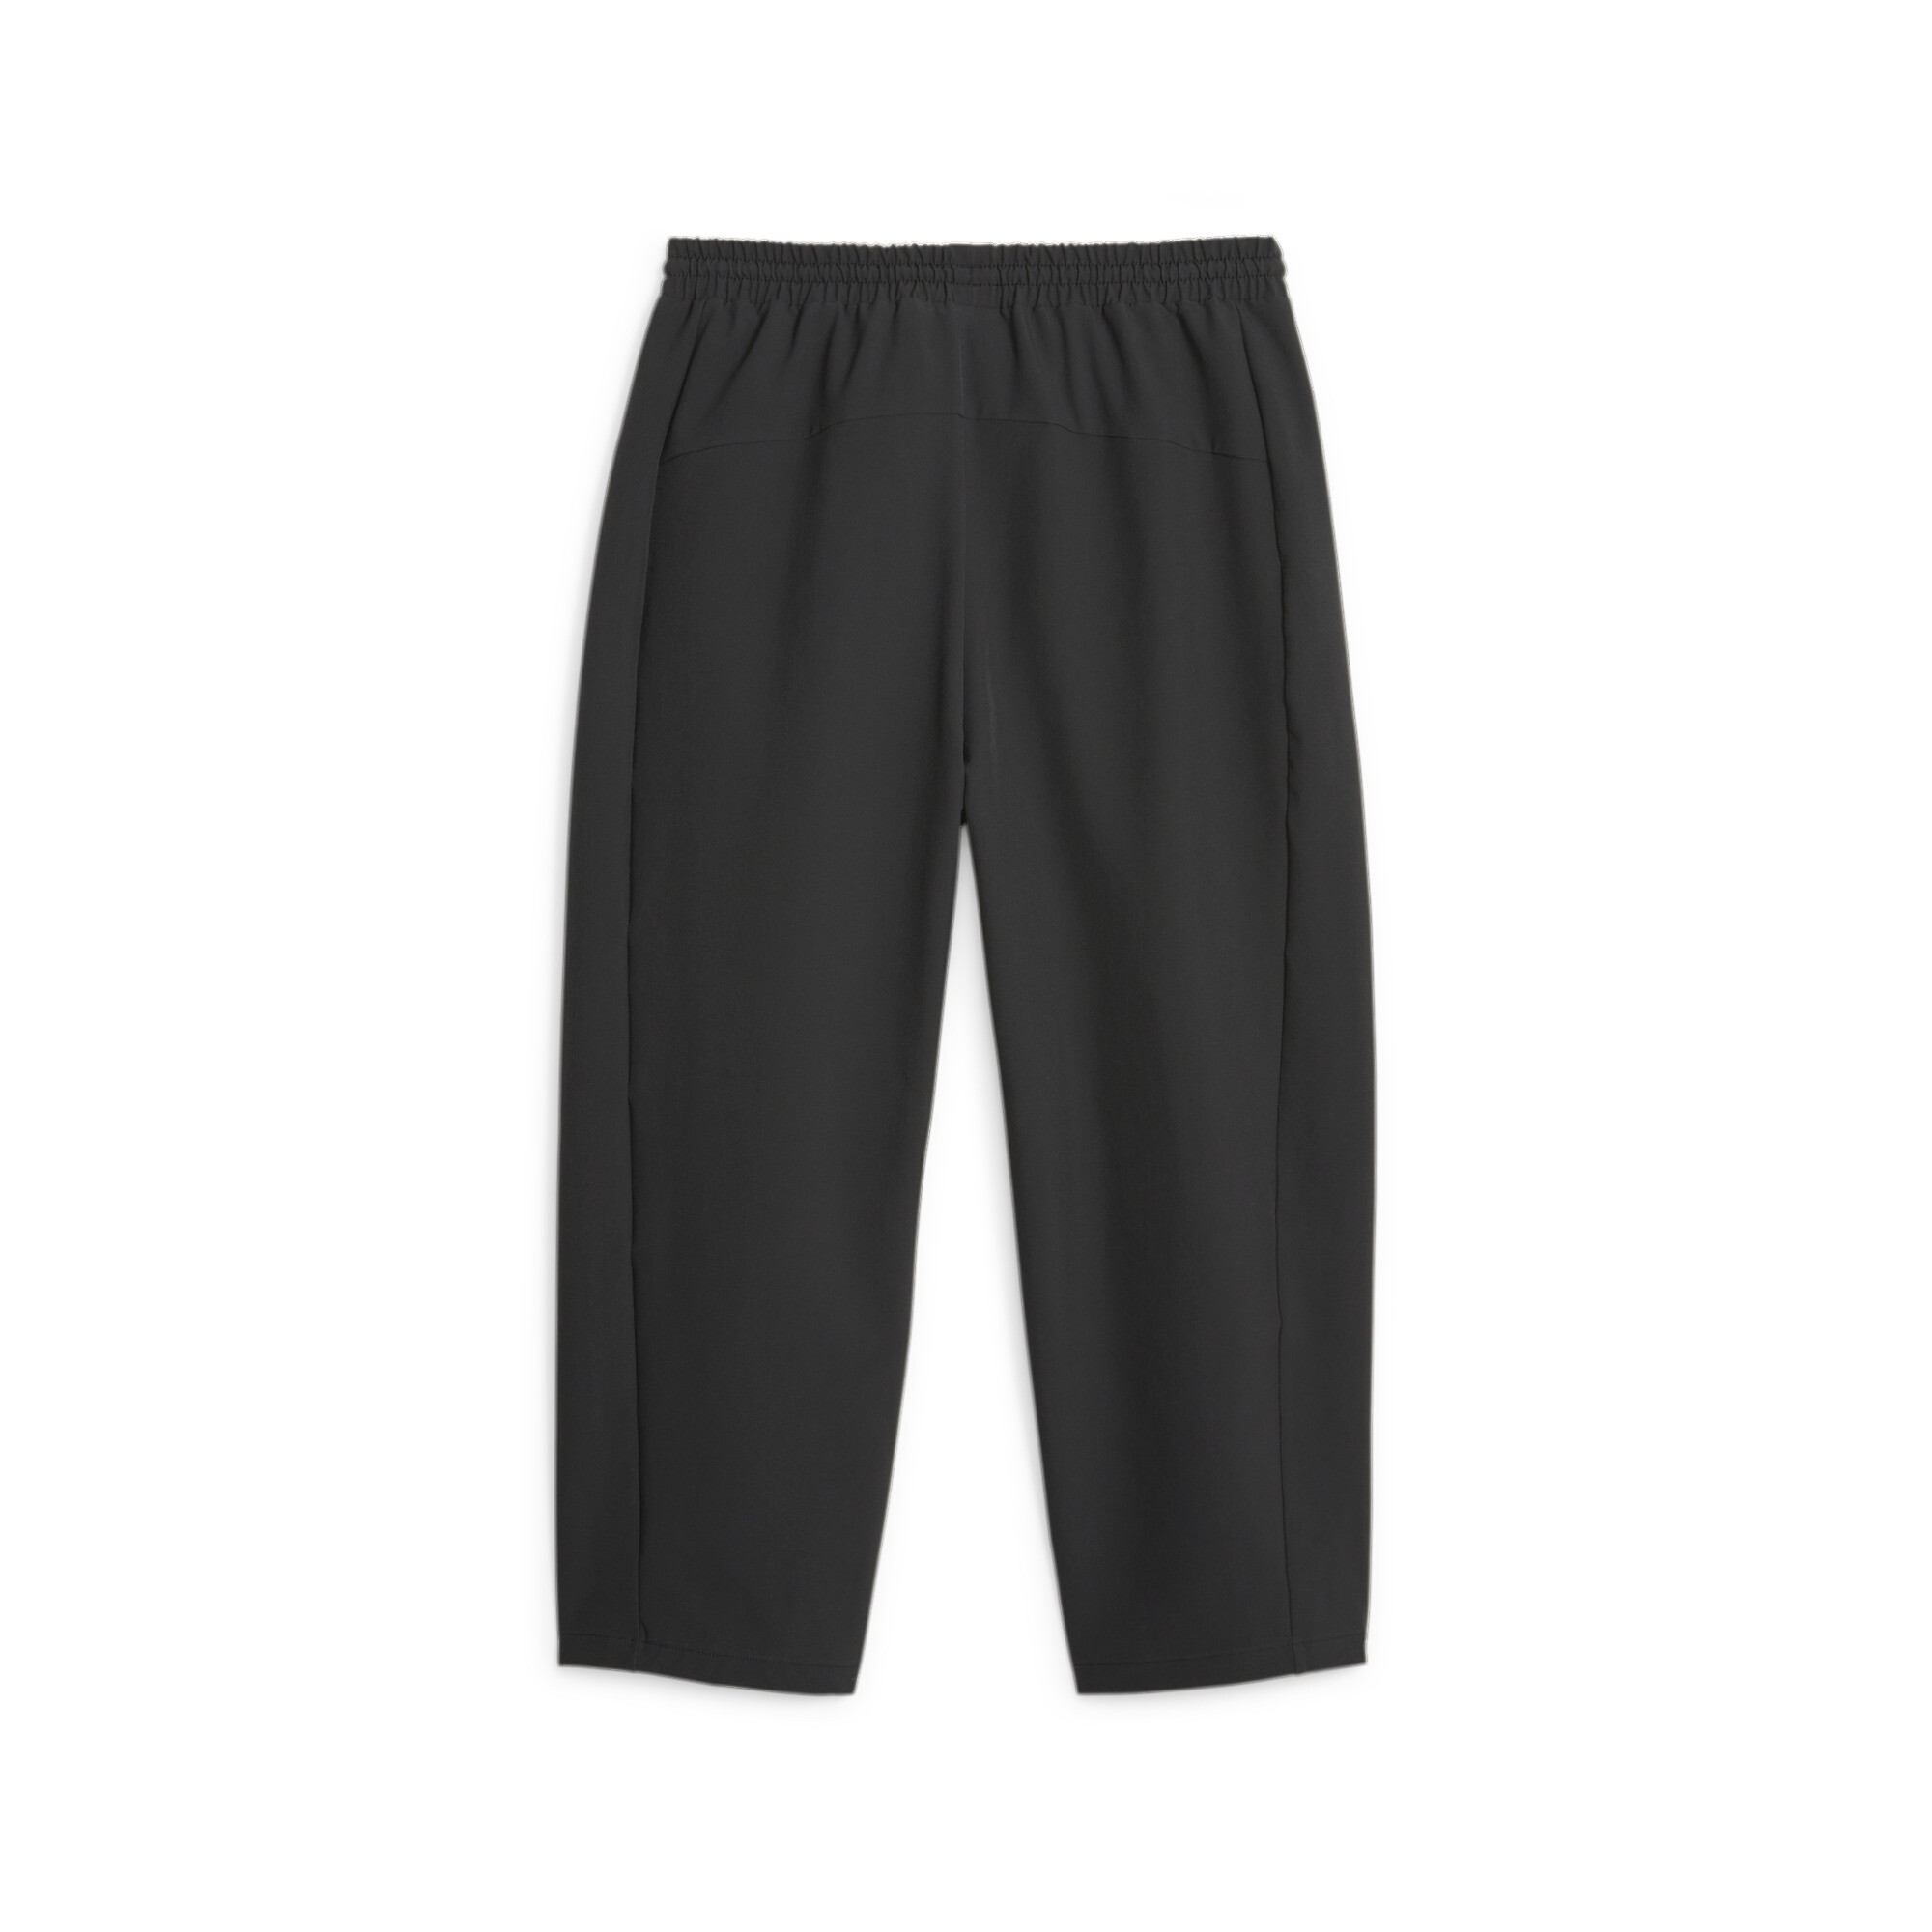 Women's PUMA YONA Pants In Black, Size Medium